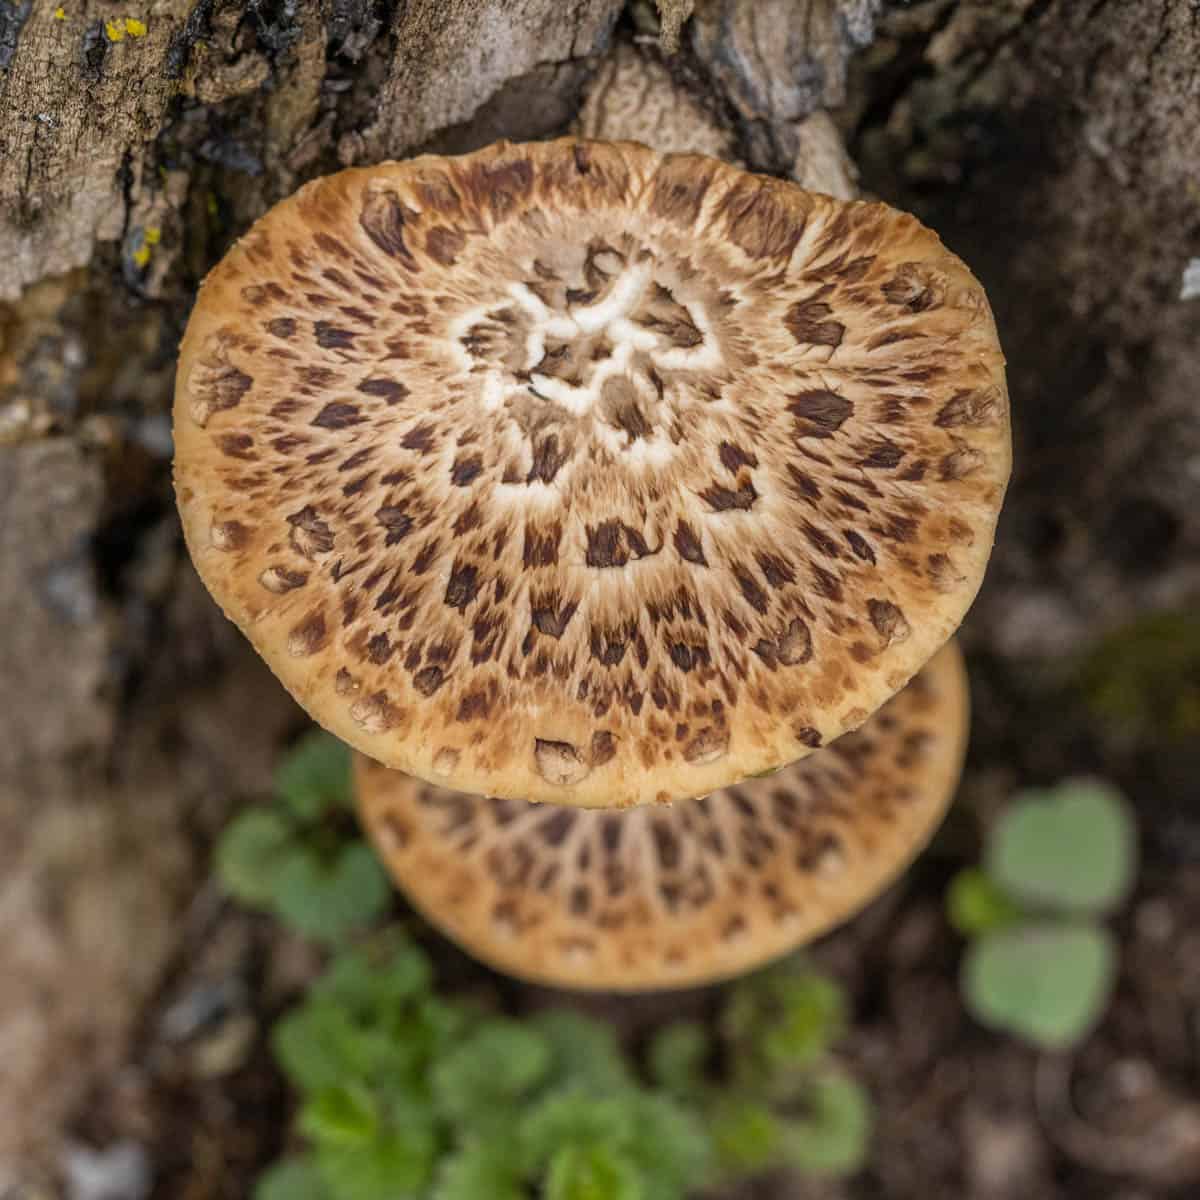 cerioporus squamosus dryad saddle or pheasant back mushroom